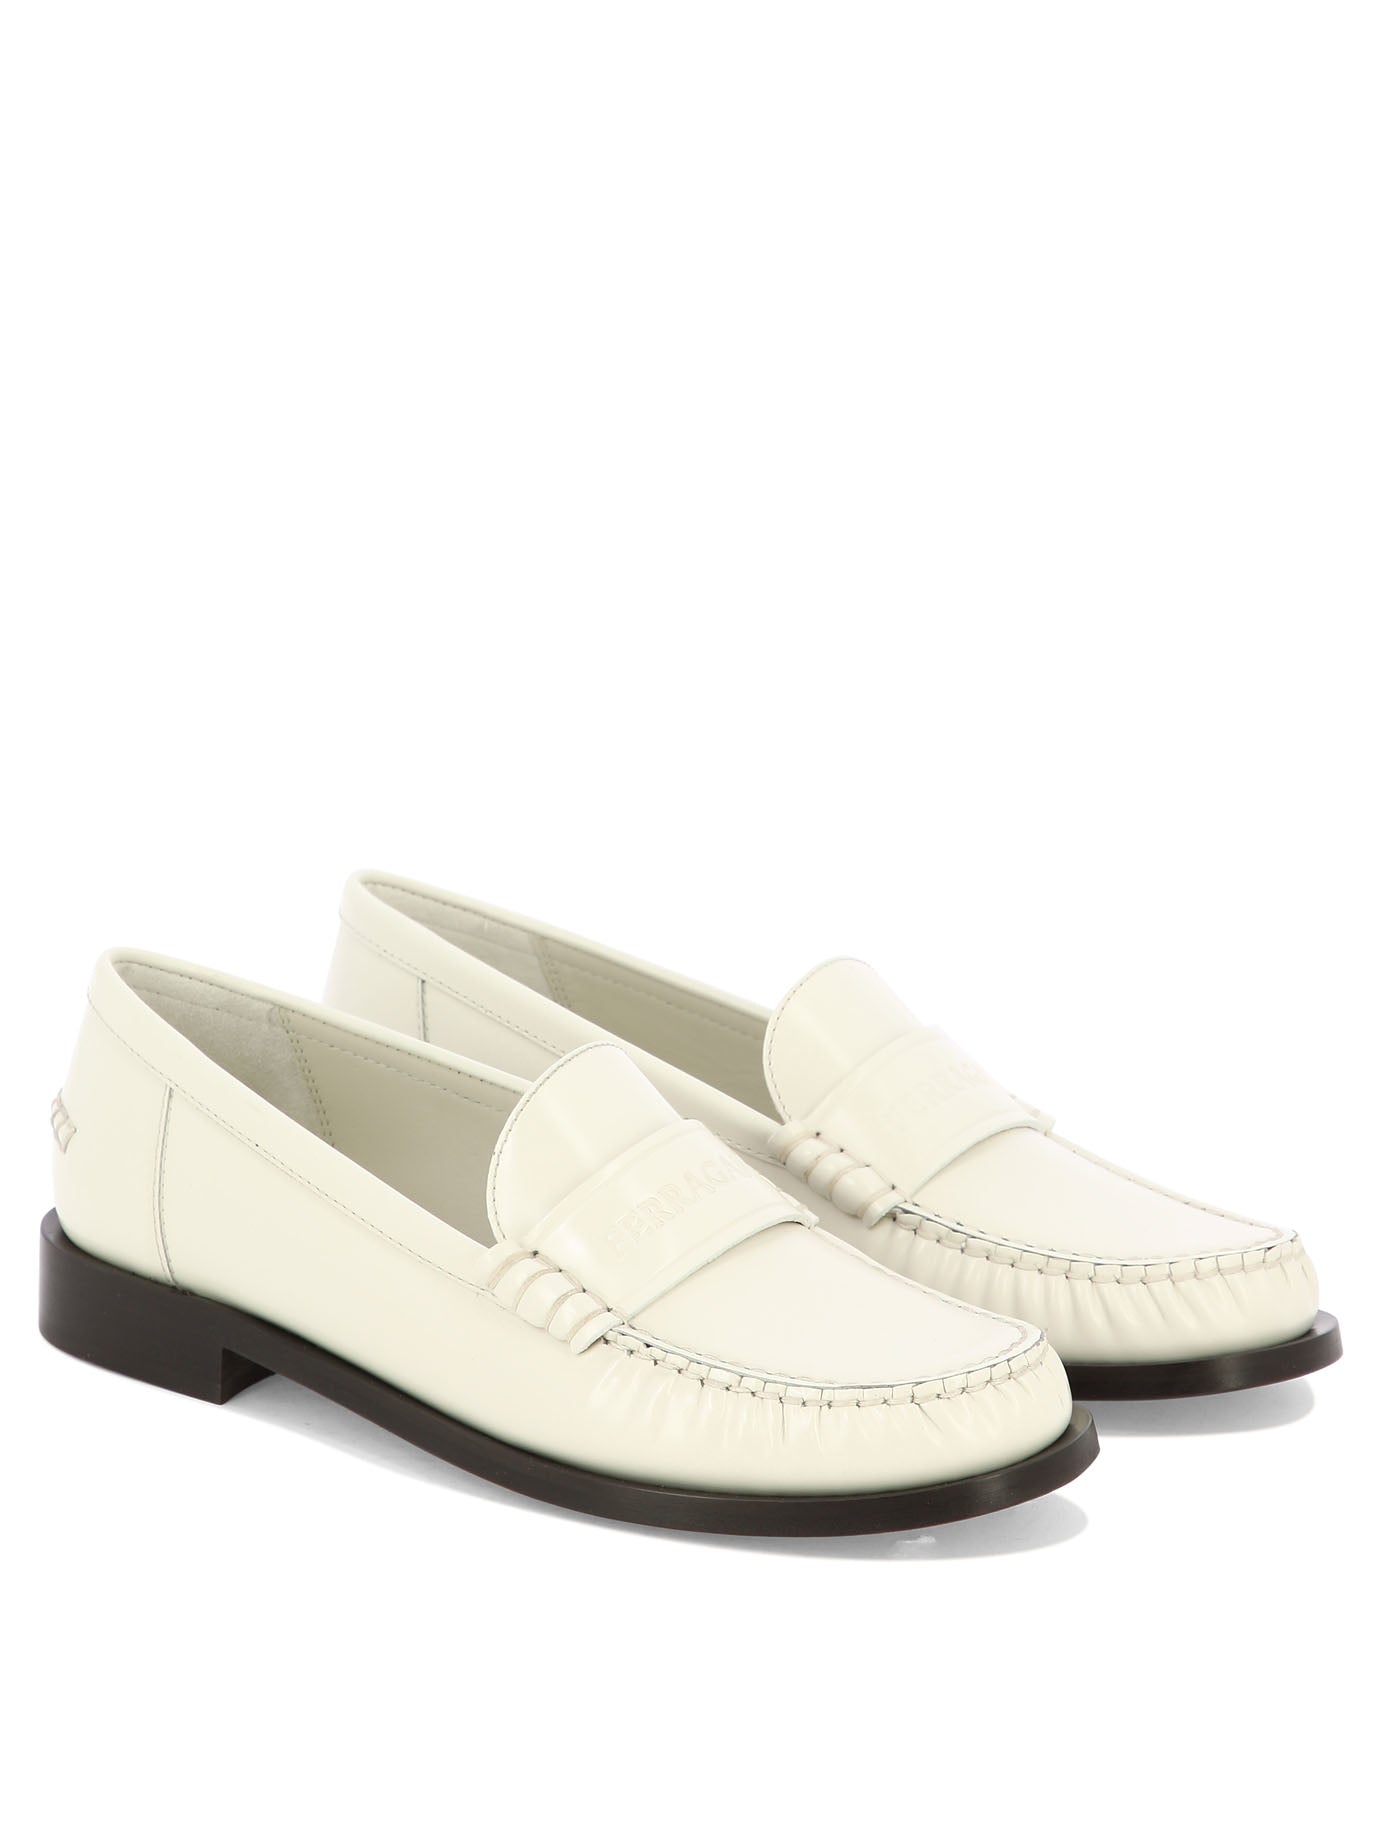 Shop Ferragamo Stylish White Slip-on Loafers For Women